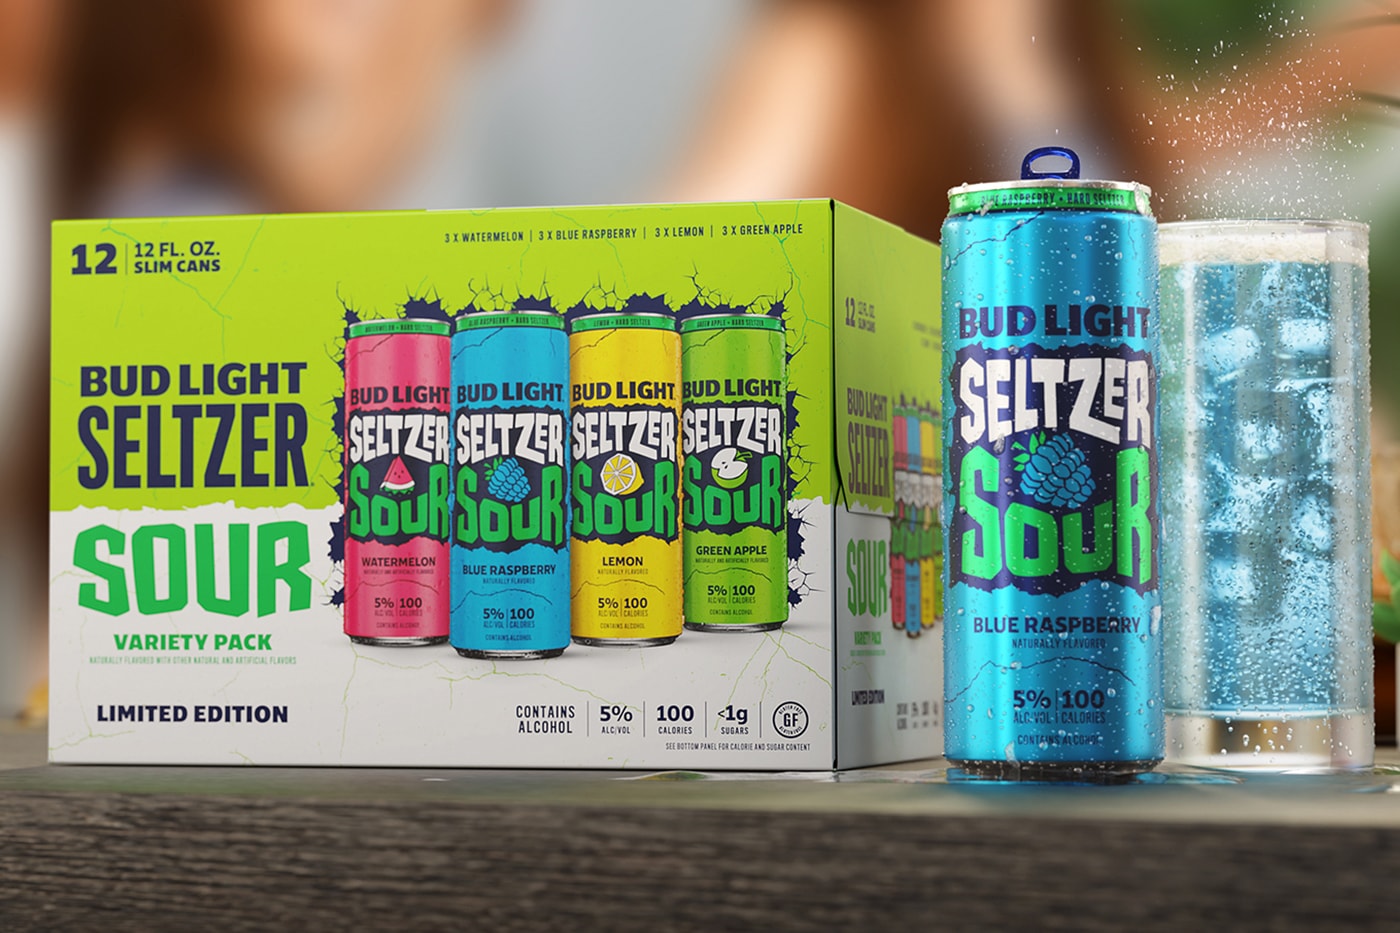 Bud Light Seltzer Hard Soda/Sour Launch